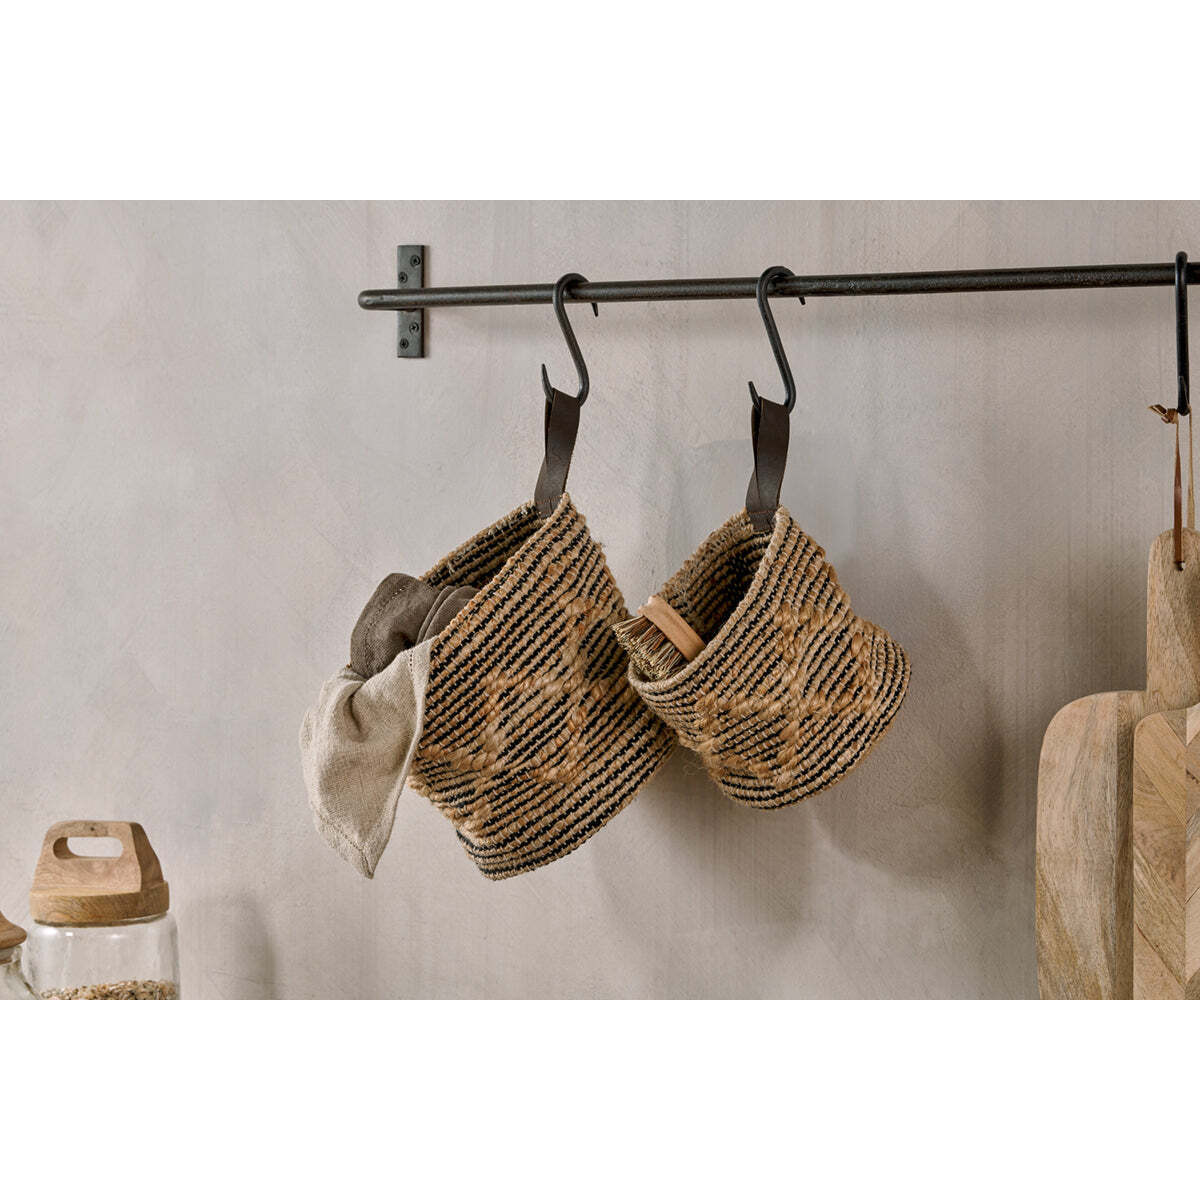 Nkuku Mannu Cotton & Hemp Wall Hung Basket - Storage & Hanging Accessories - Natural/Black - Small